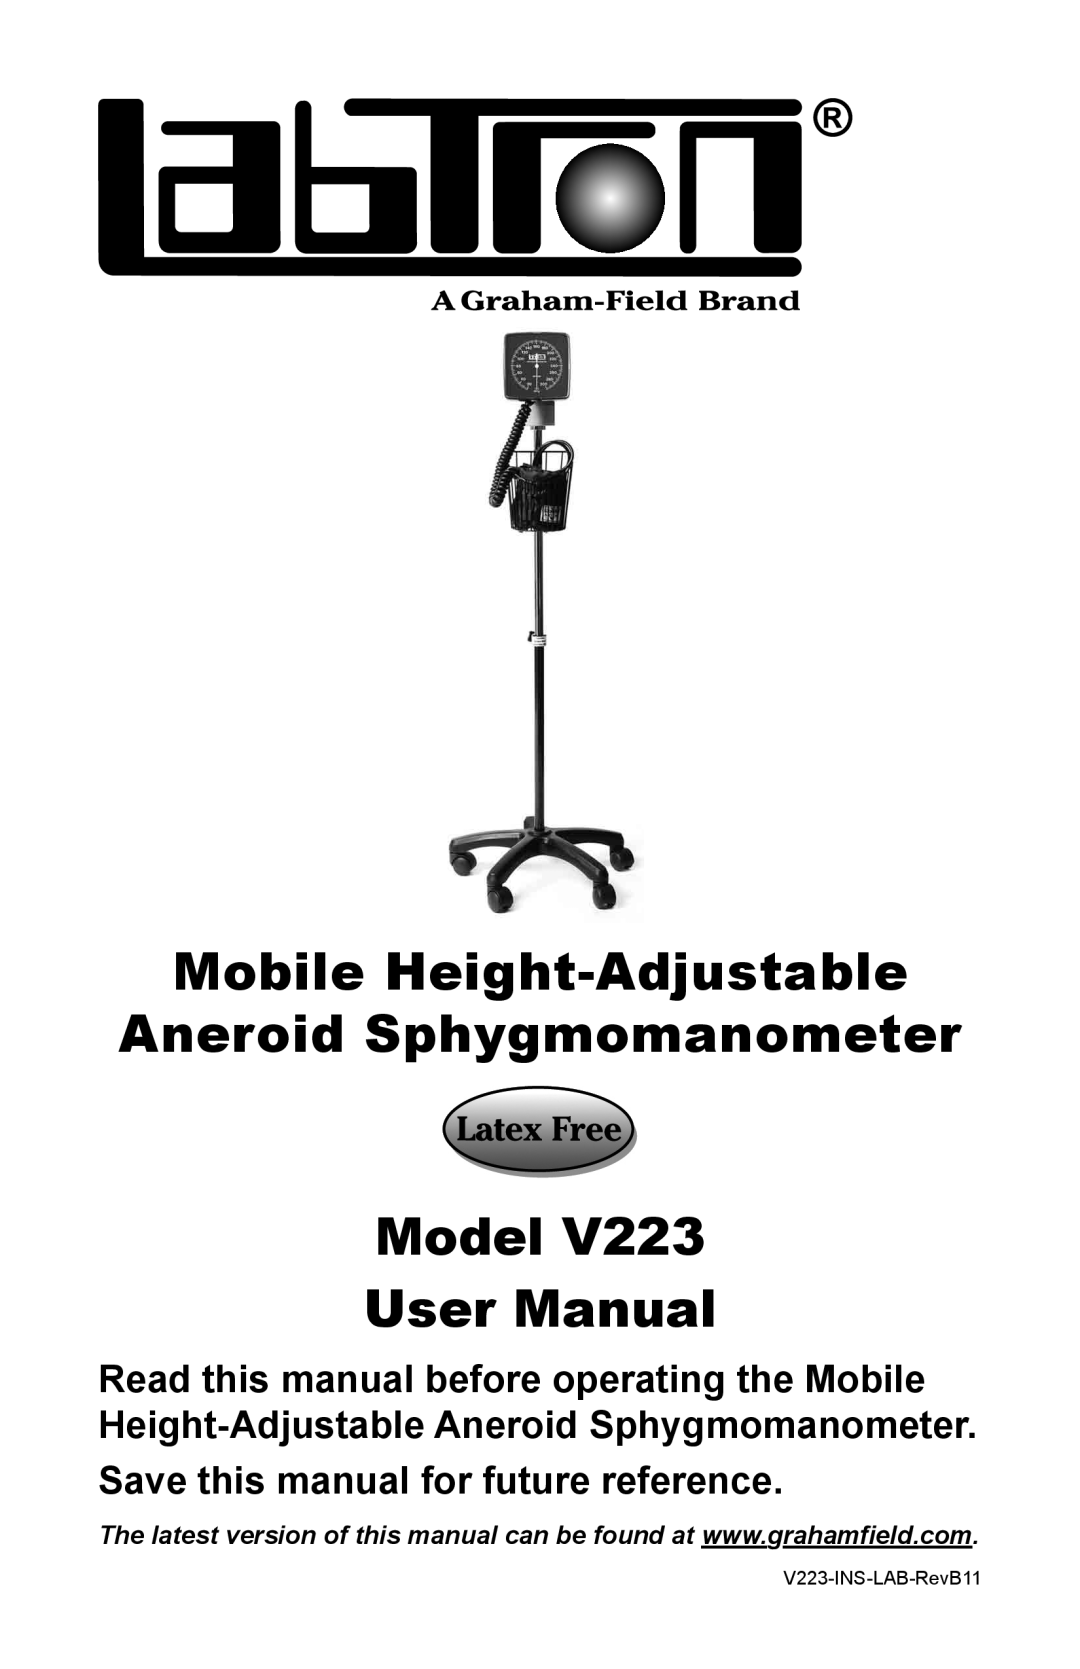 Graham Field V223 user manual Mobile Height-Adjustable Aneroid Sphygmomanometer Model 223B Model, User Manual 